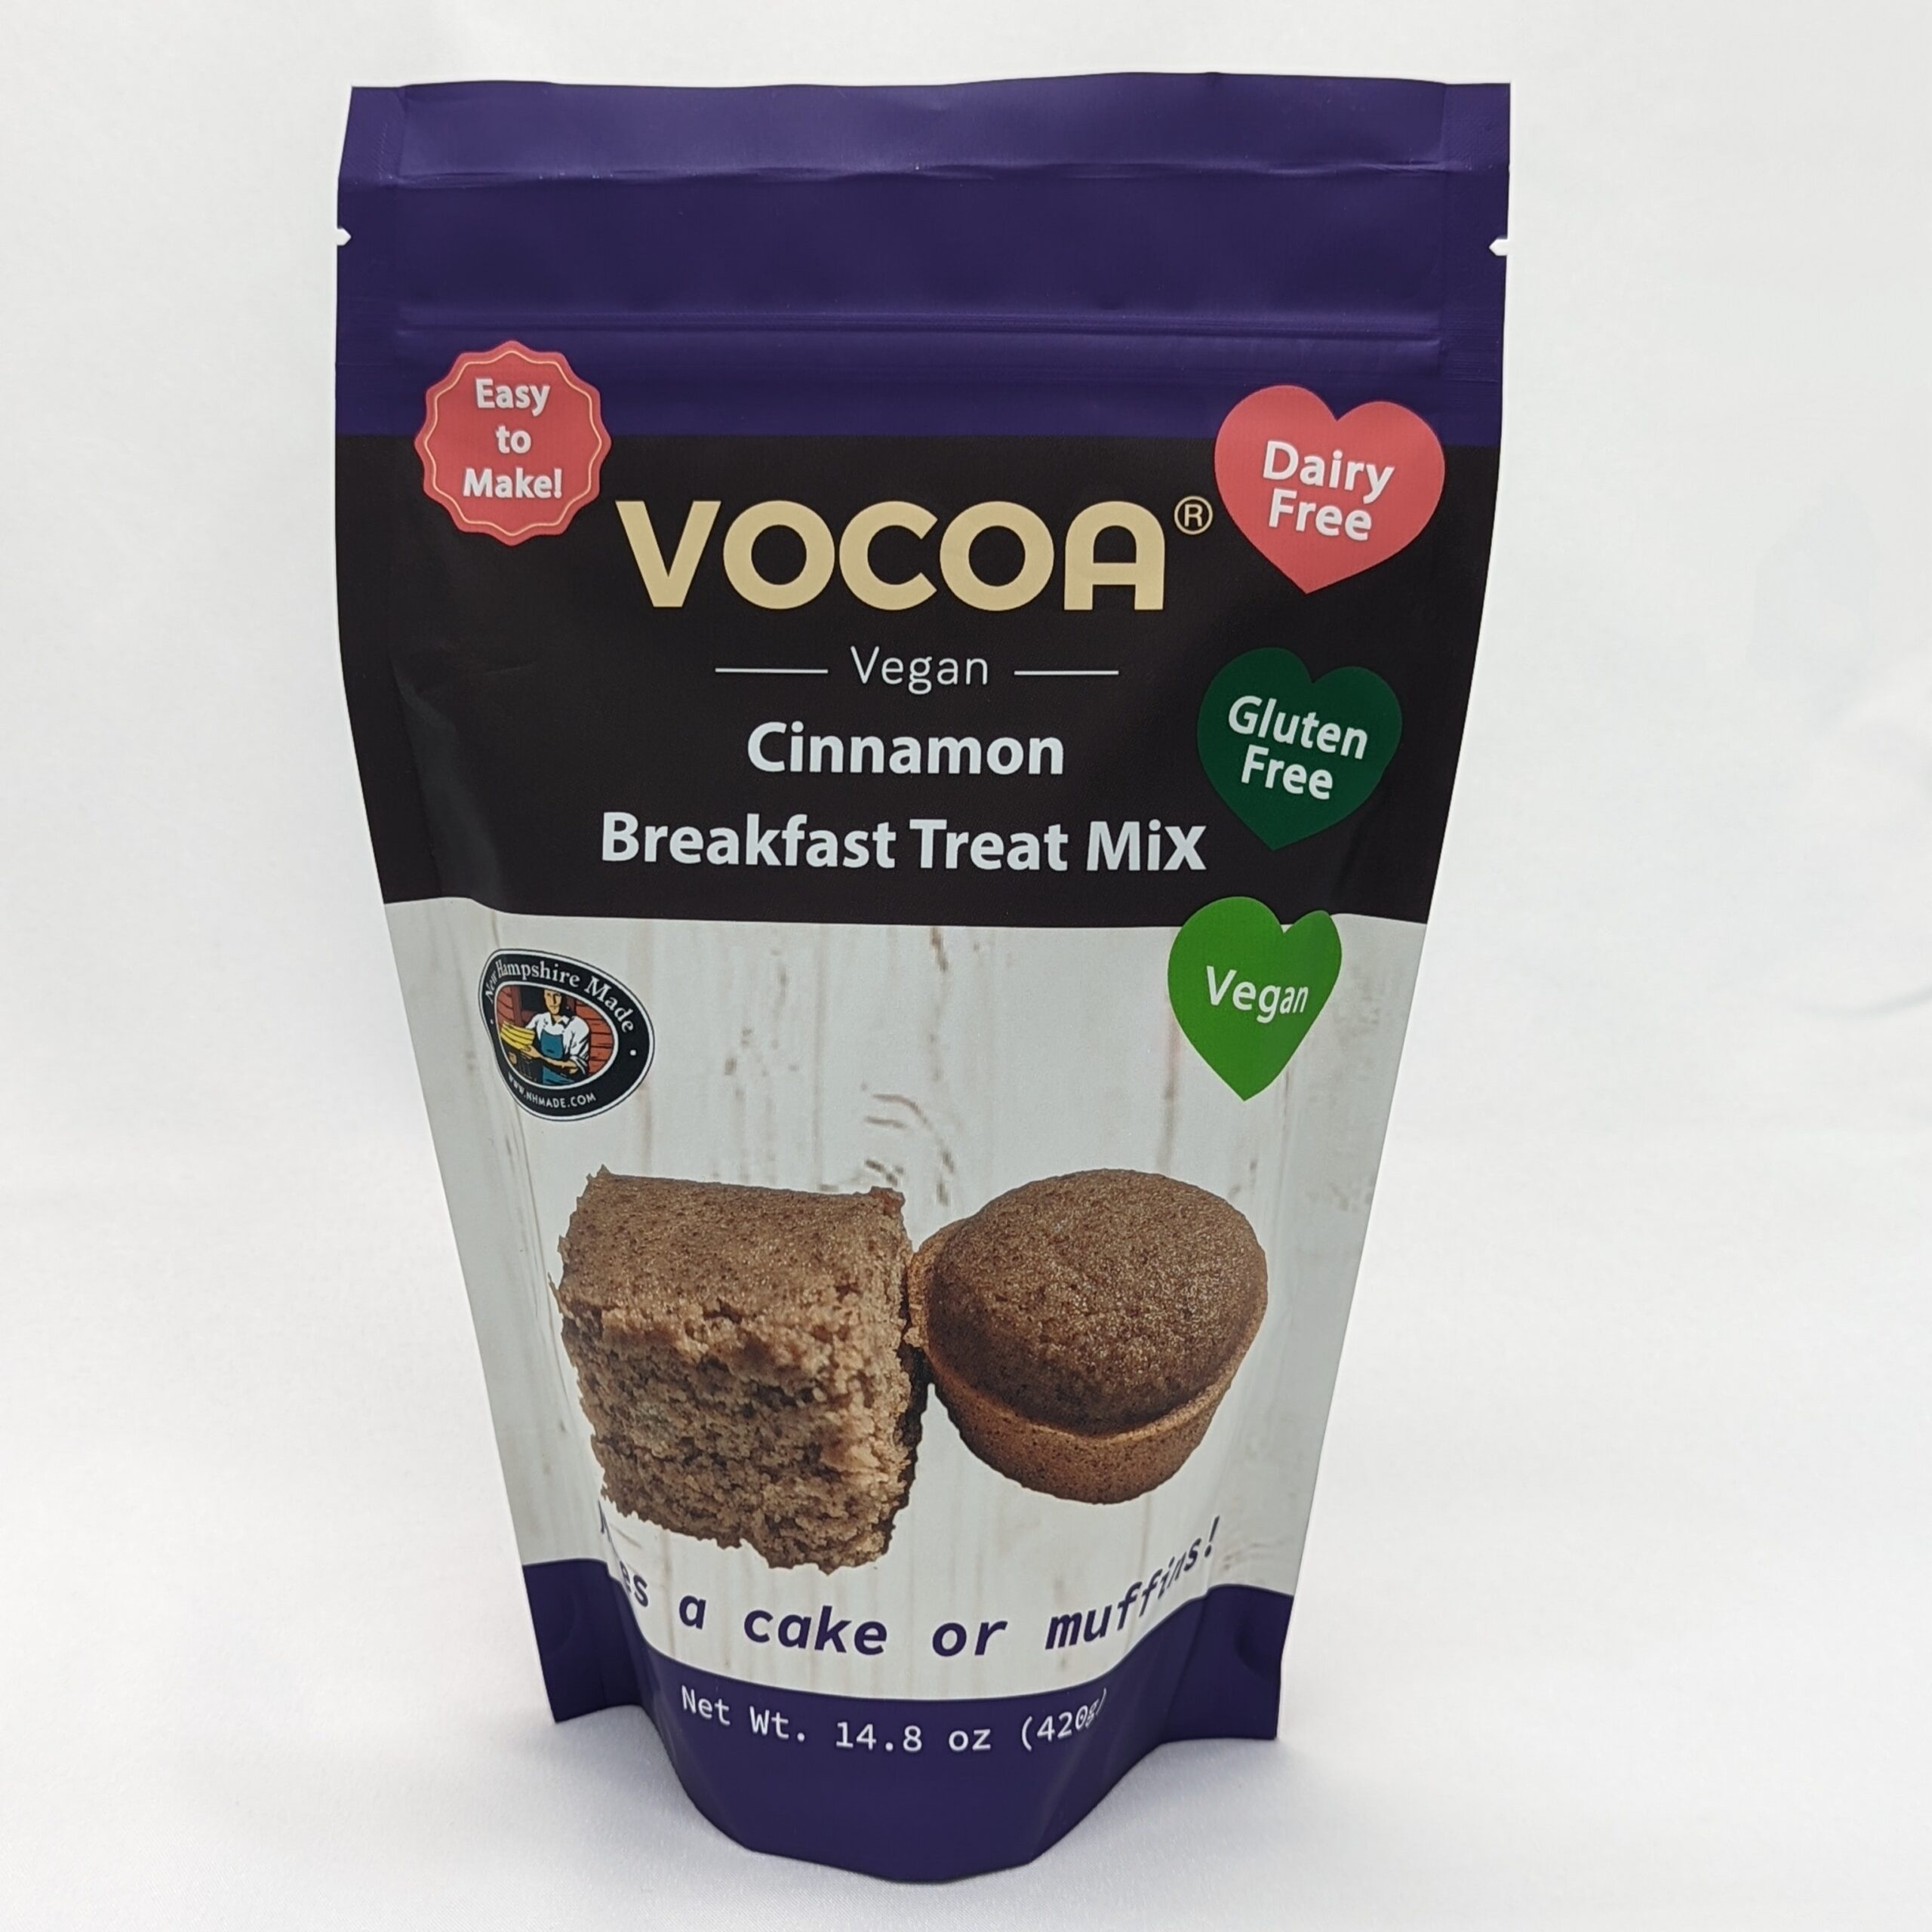 Package of Vocoa Cinnamon Breakfast Treat Mix